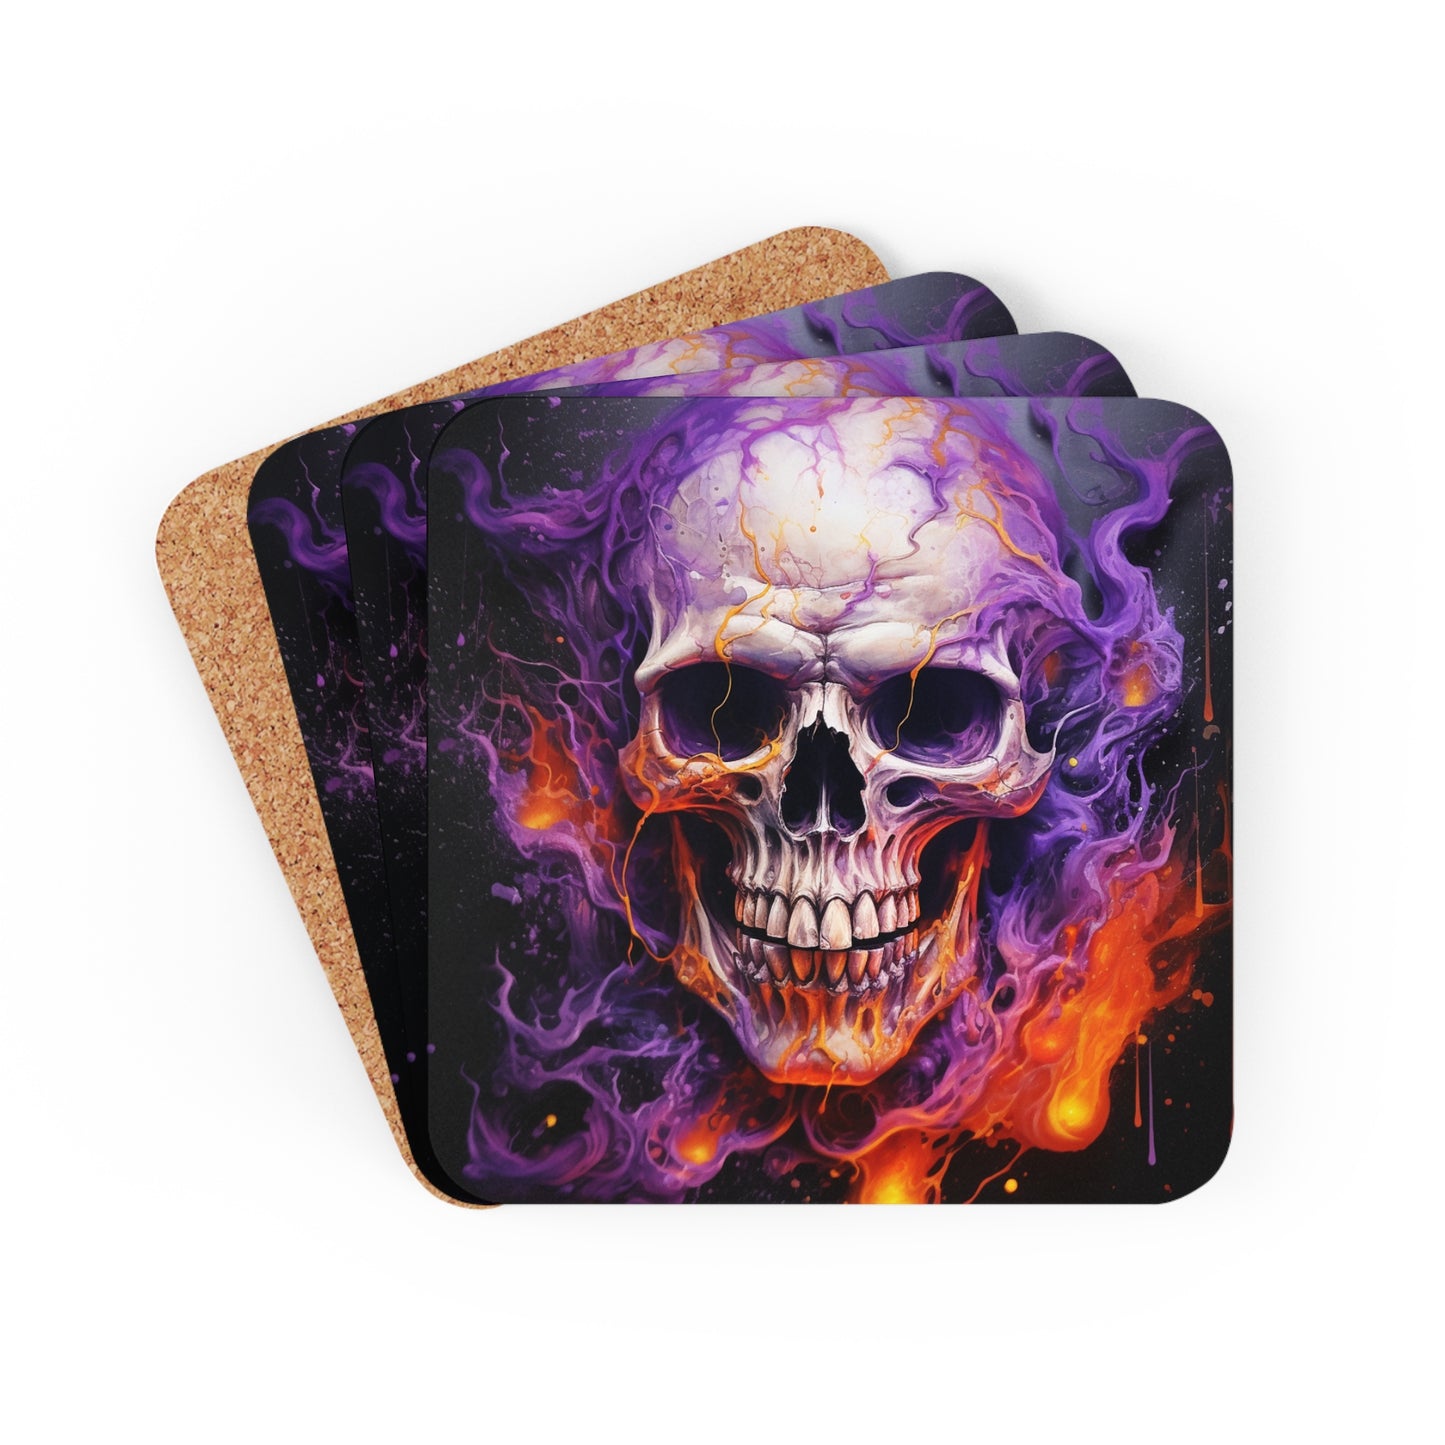 Corkwood Coaster Set Skull Flames 2